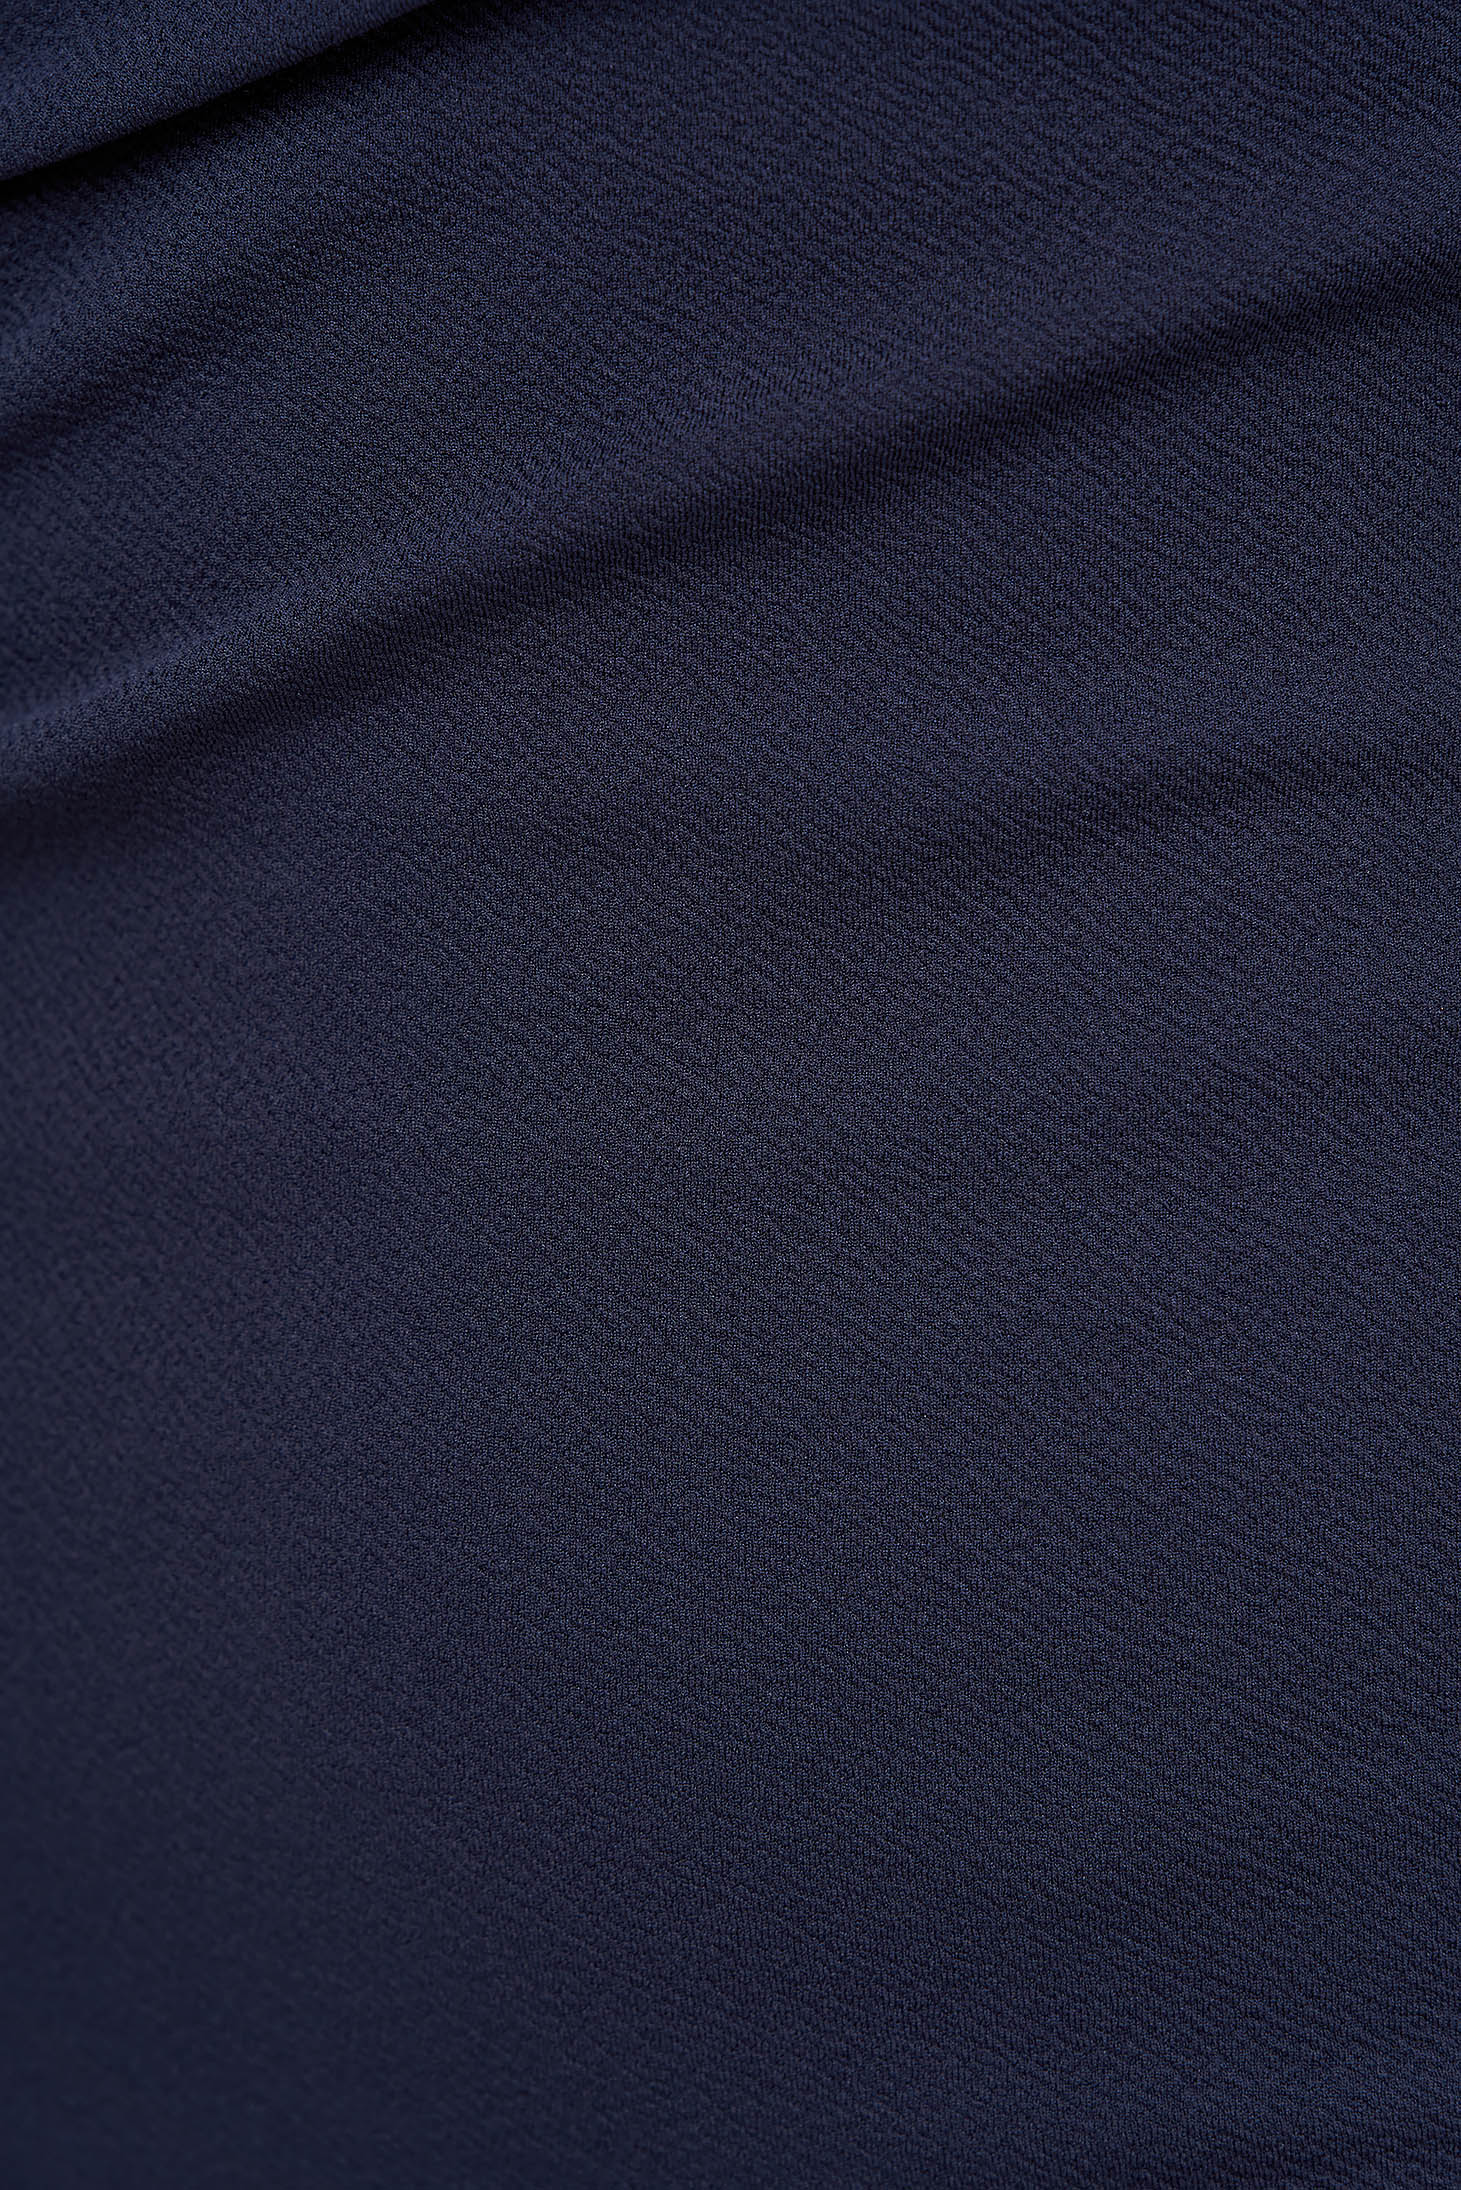 Rochie din crep texturat bleumarin midi tip creion cu decolteu petrecut - StarShinerS 5 - StarShinerS.ro